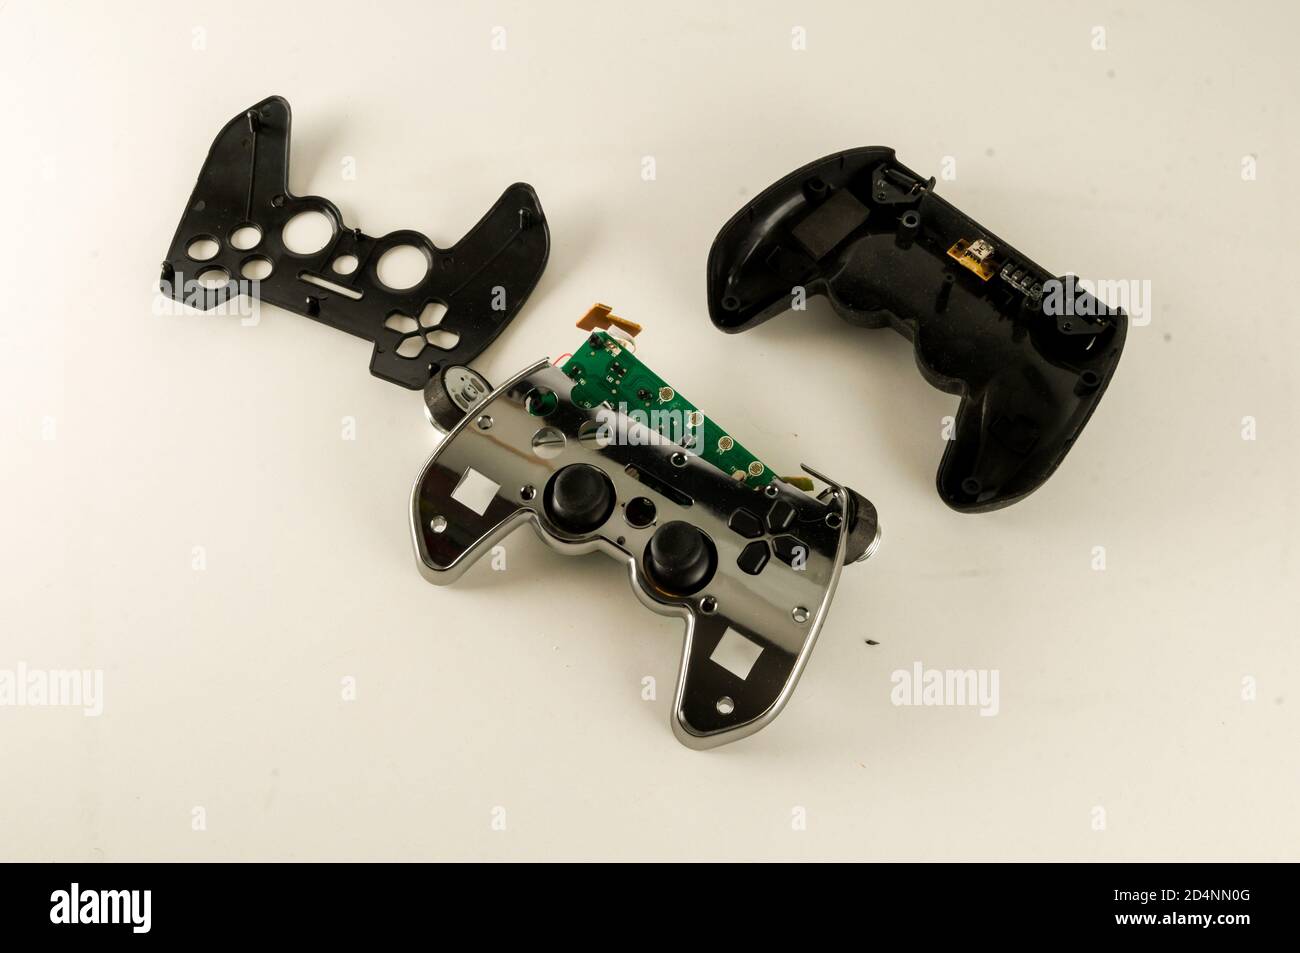 Broken Gamepad Joystick on white backrgound Stock Photo - Alamy